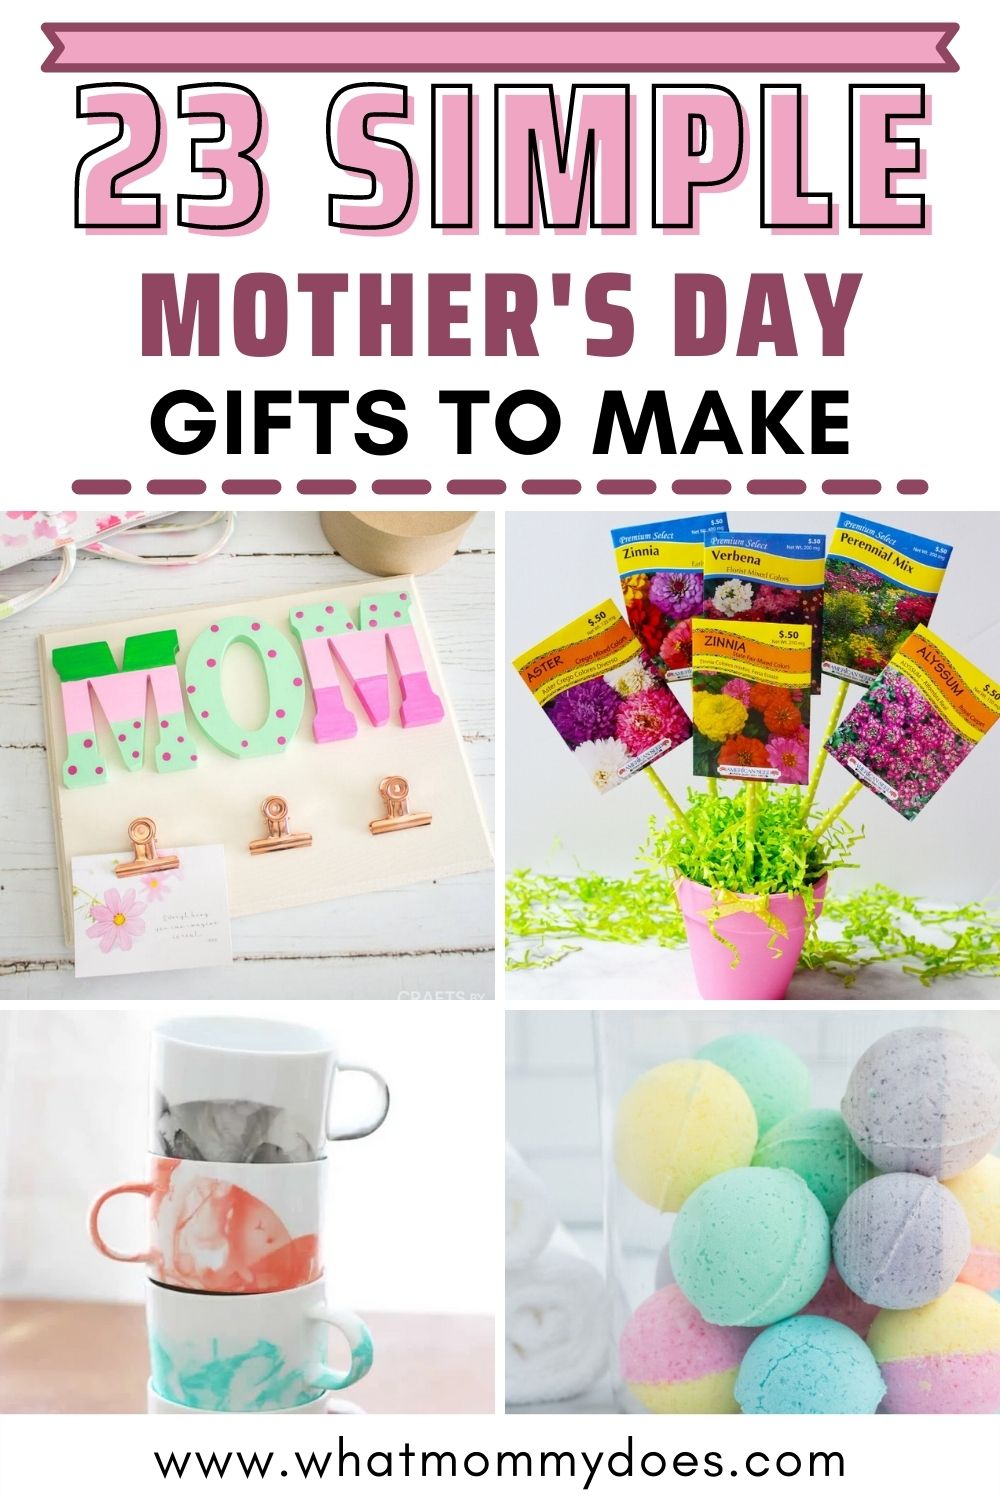 20 Unique DIY Mother's Day Gift Ideas She'll Treasure